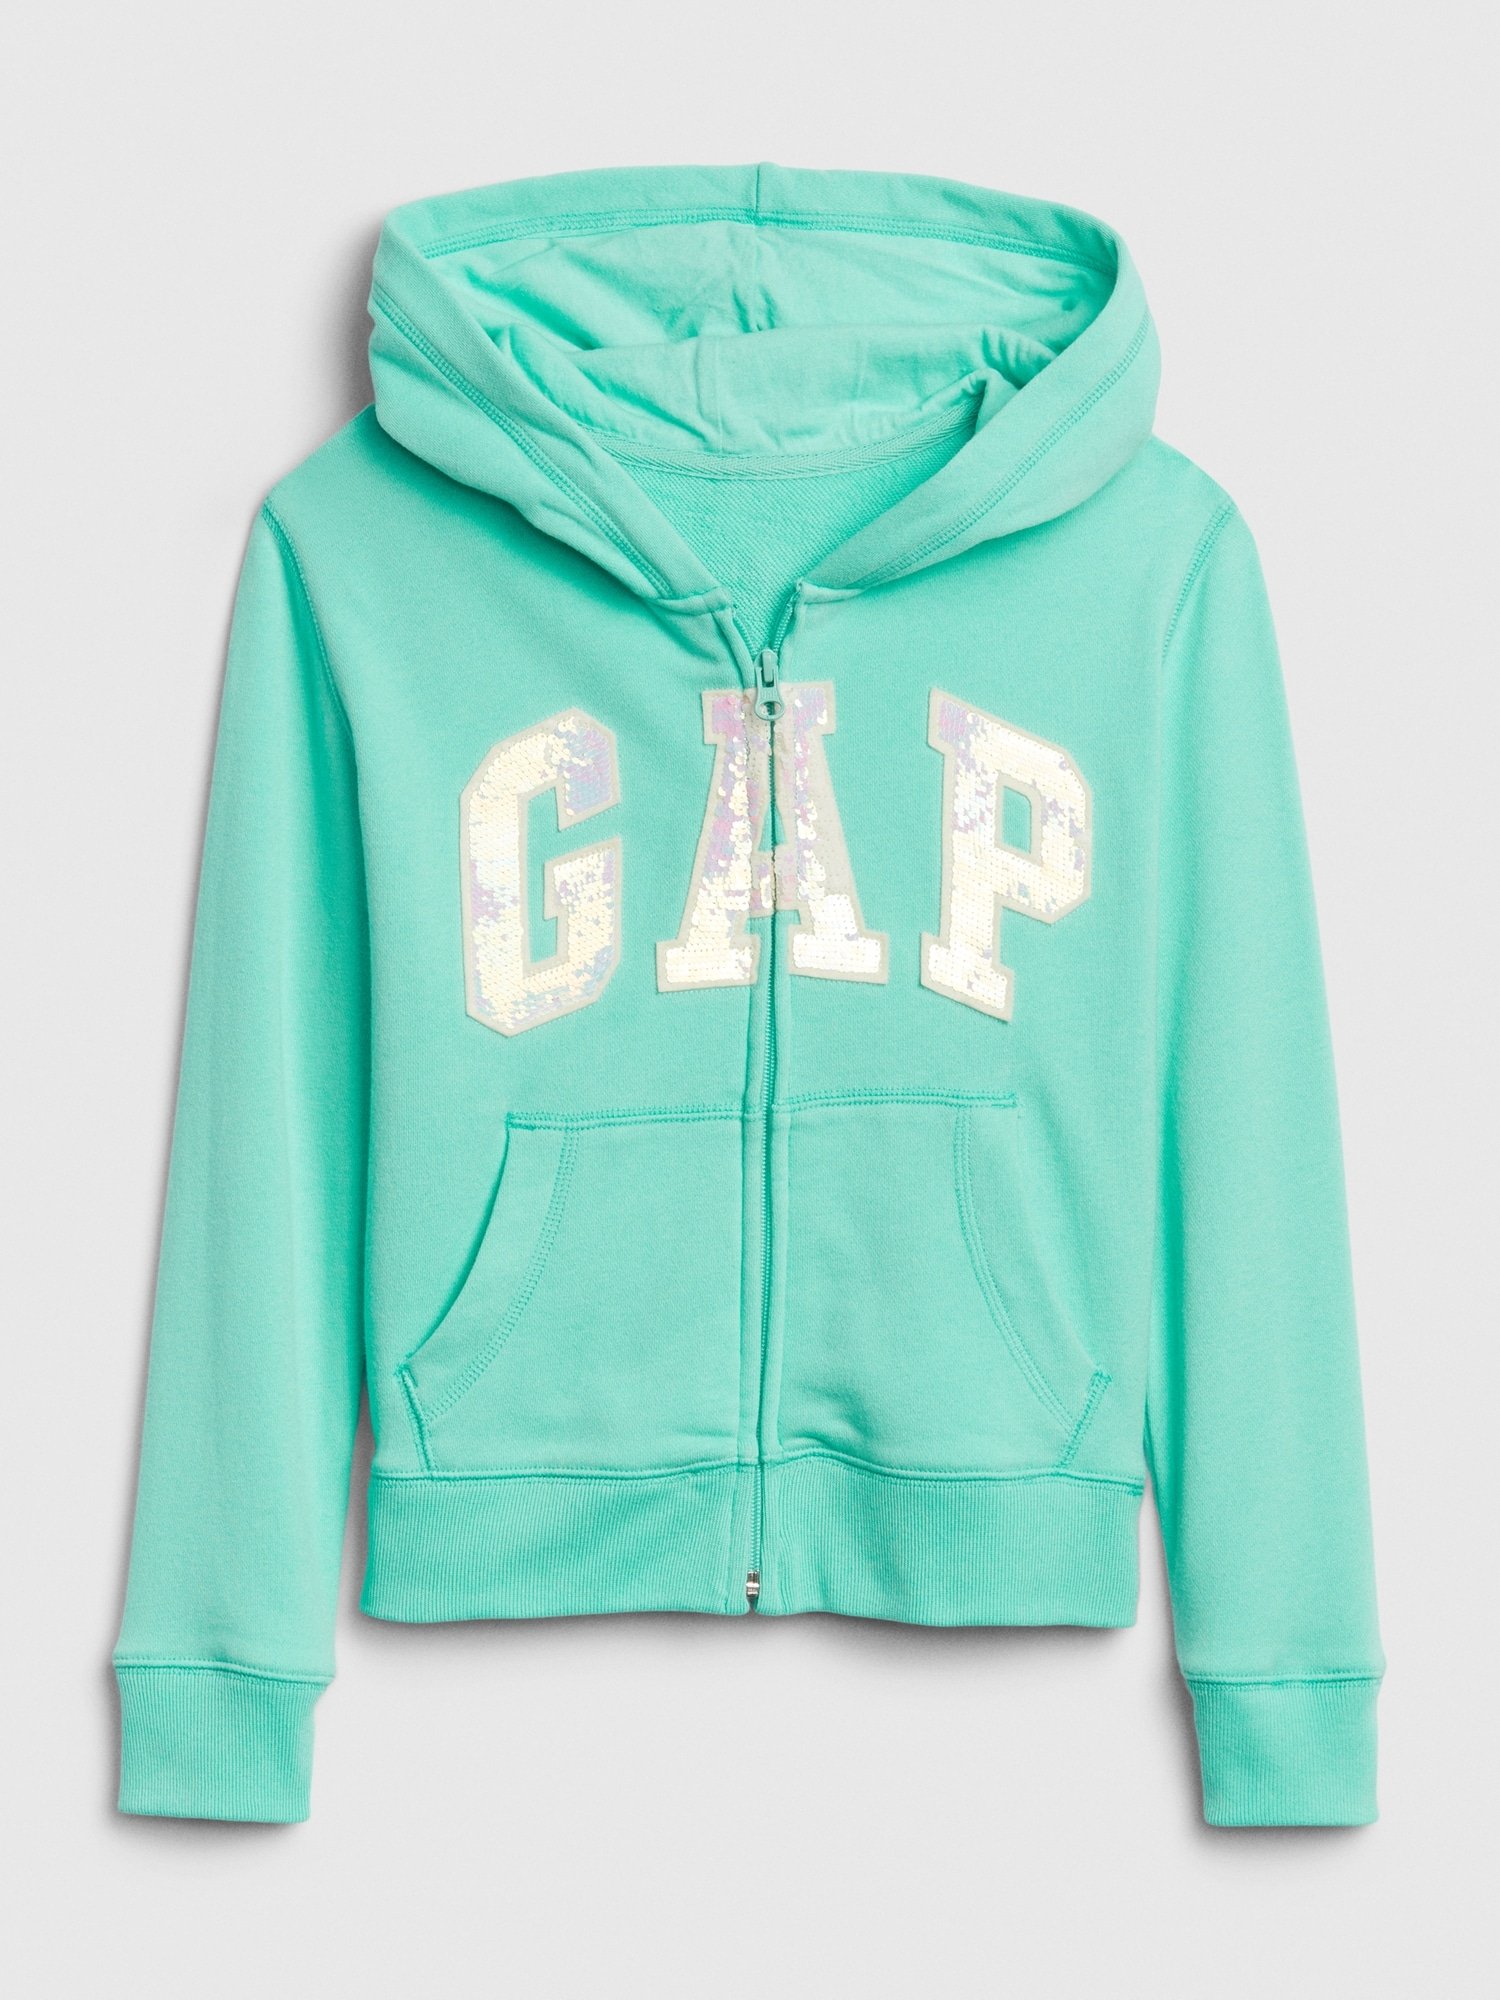 Gap Logo Pullu Kadife Sweatshirt product image